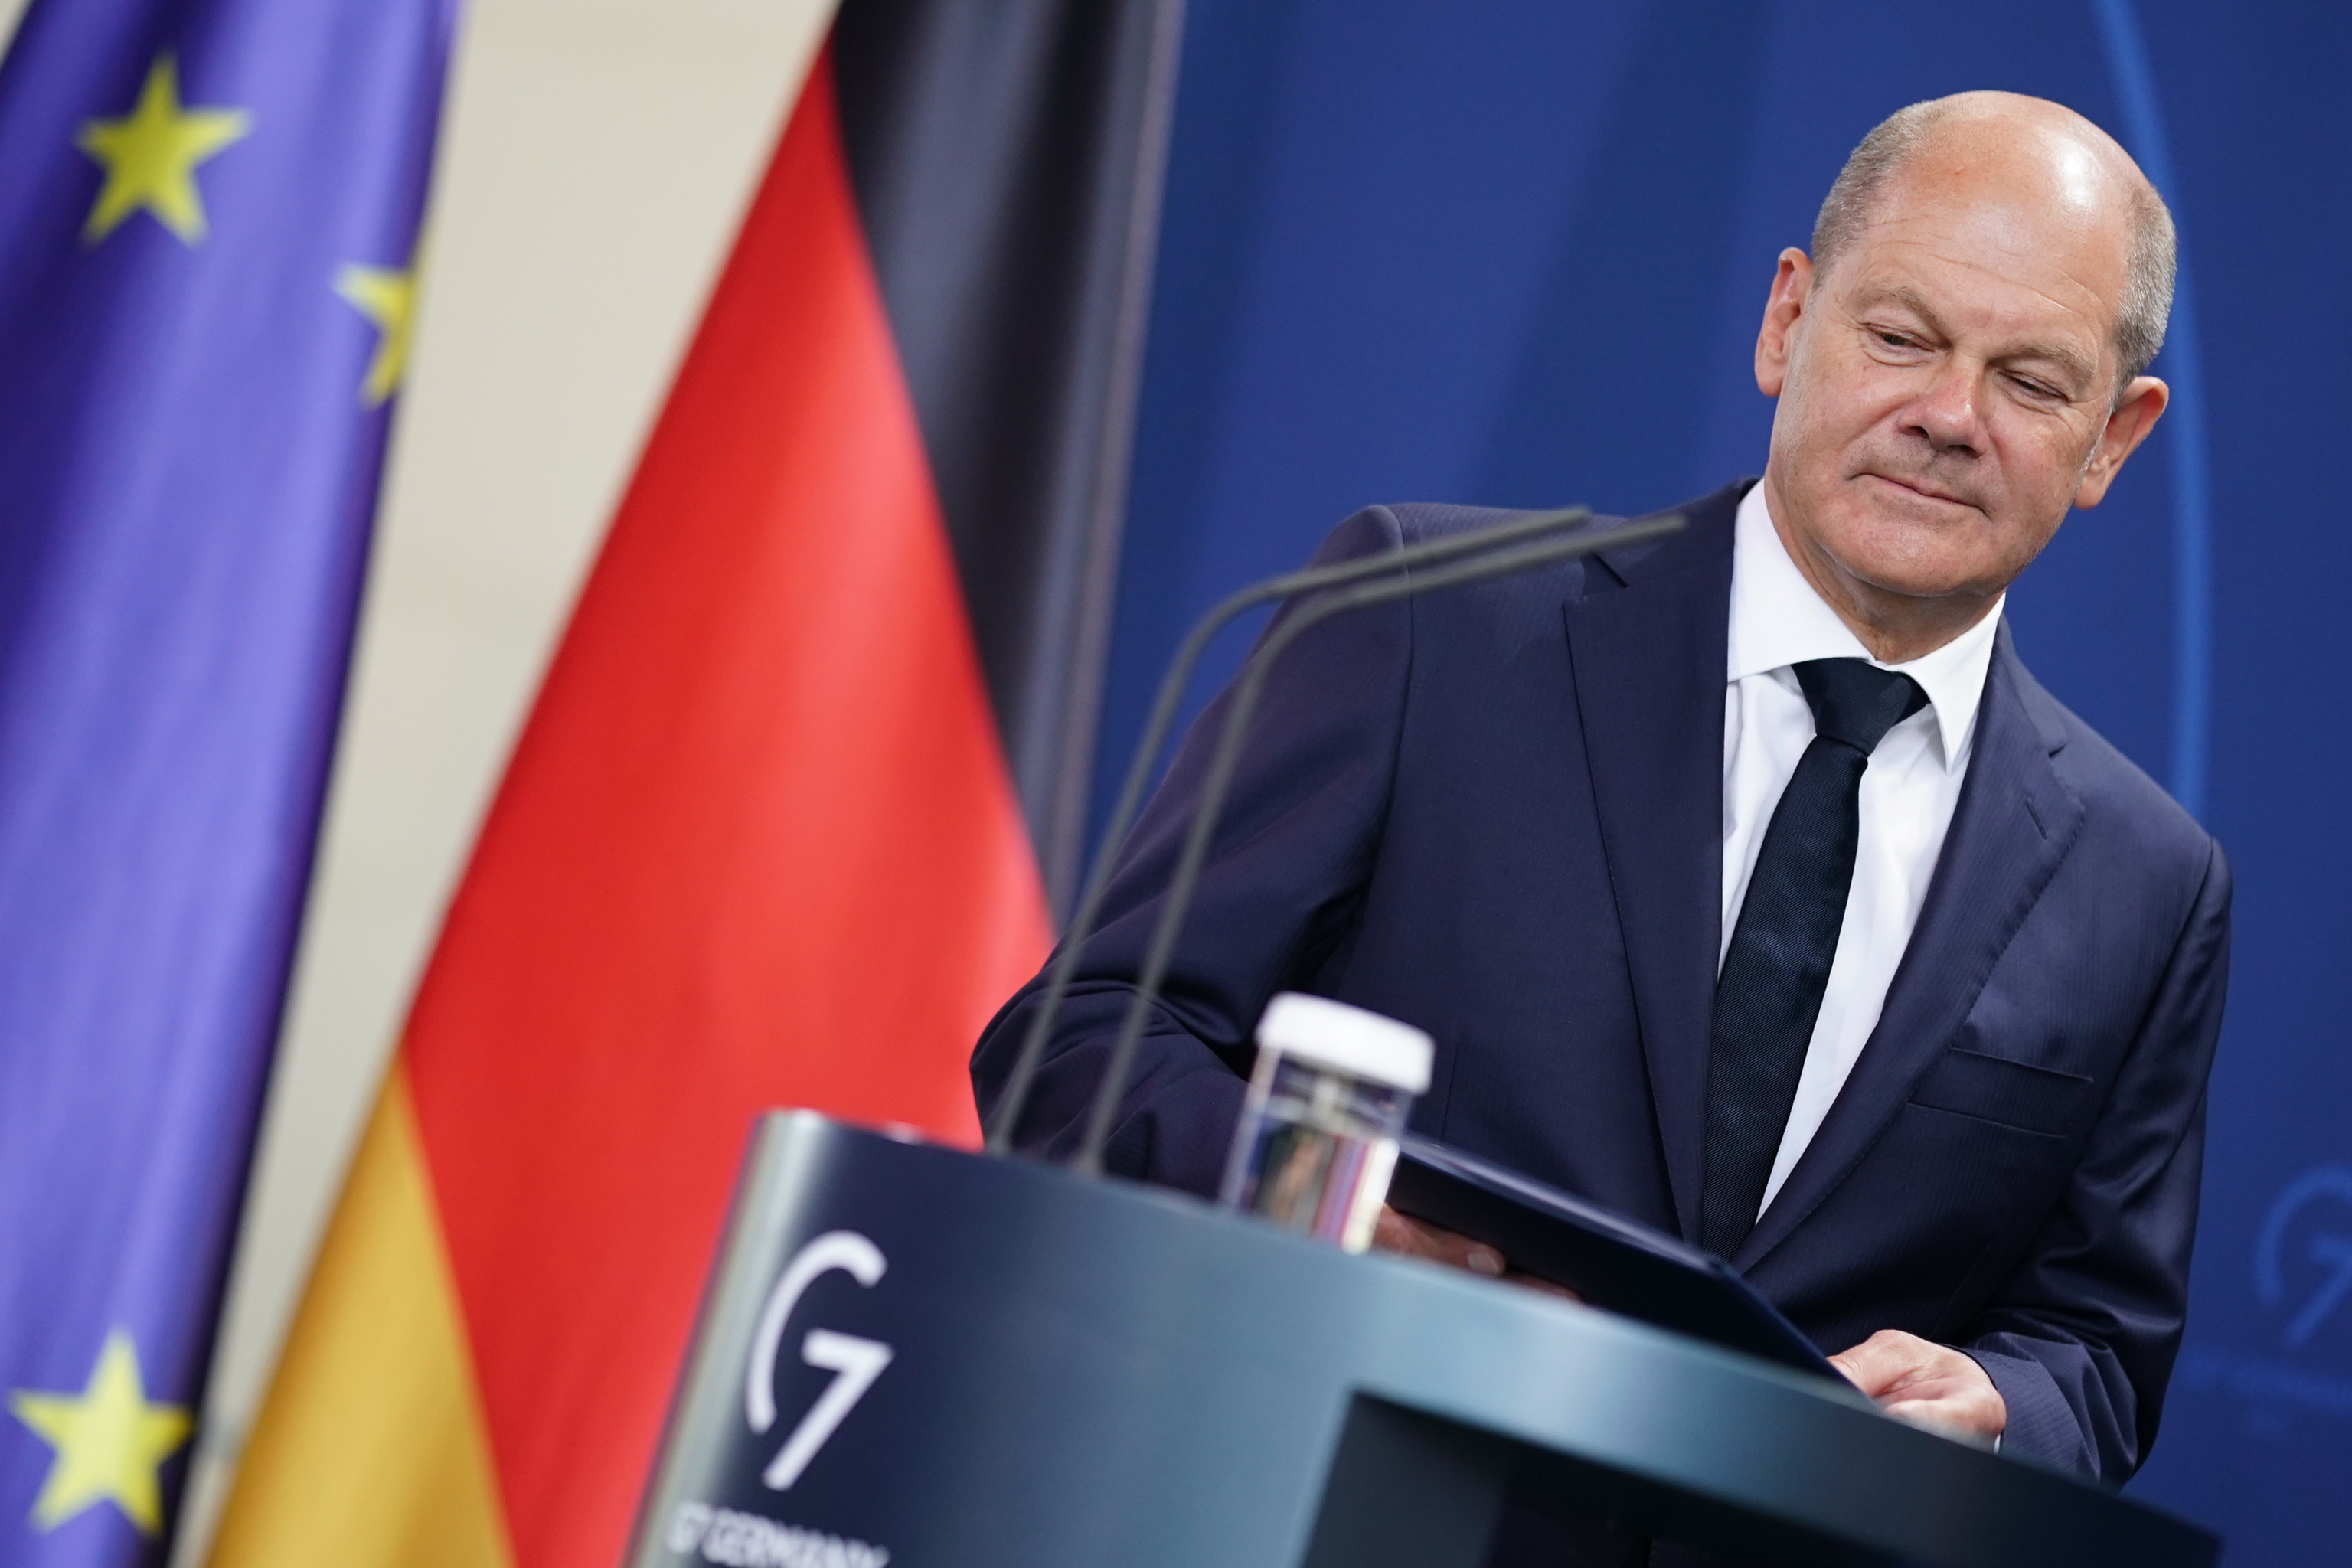 El canciller alemán Scholz rechaza toda responsabilidad en un caso de fraude fiscal